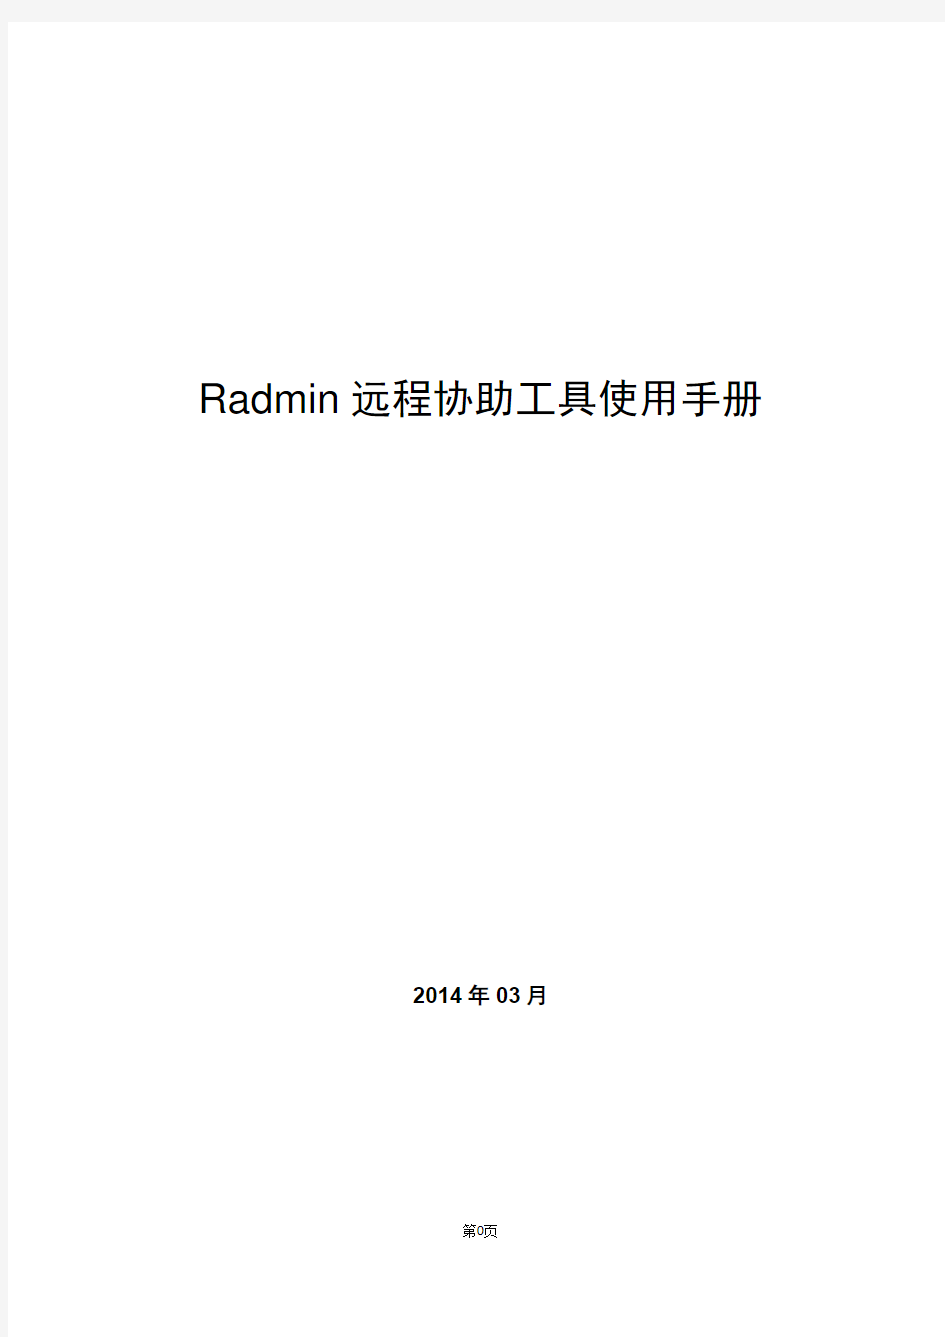 Radmin 远程协助工具使用手册